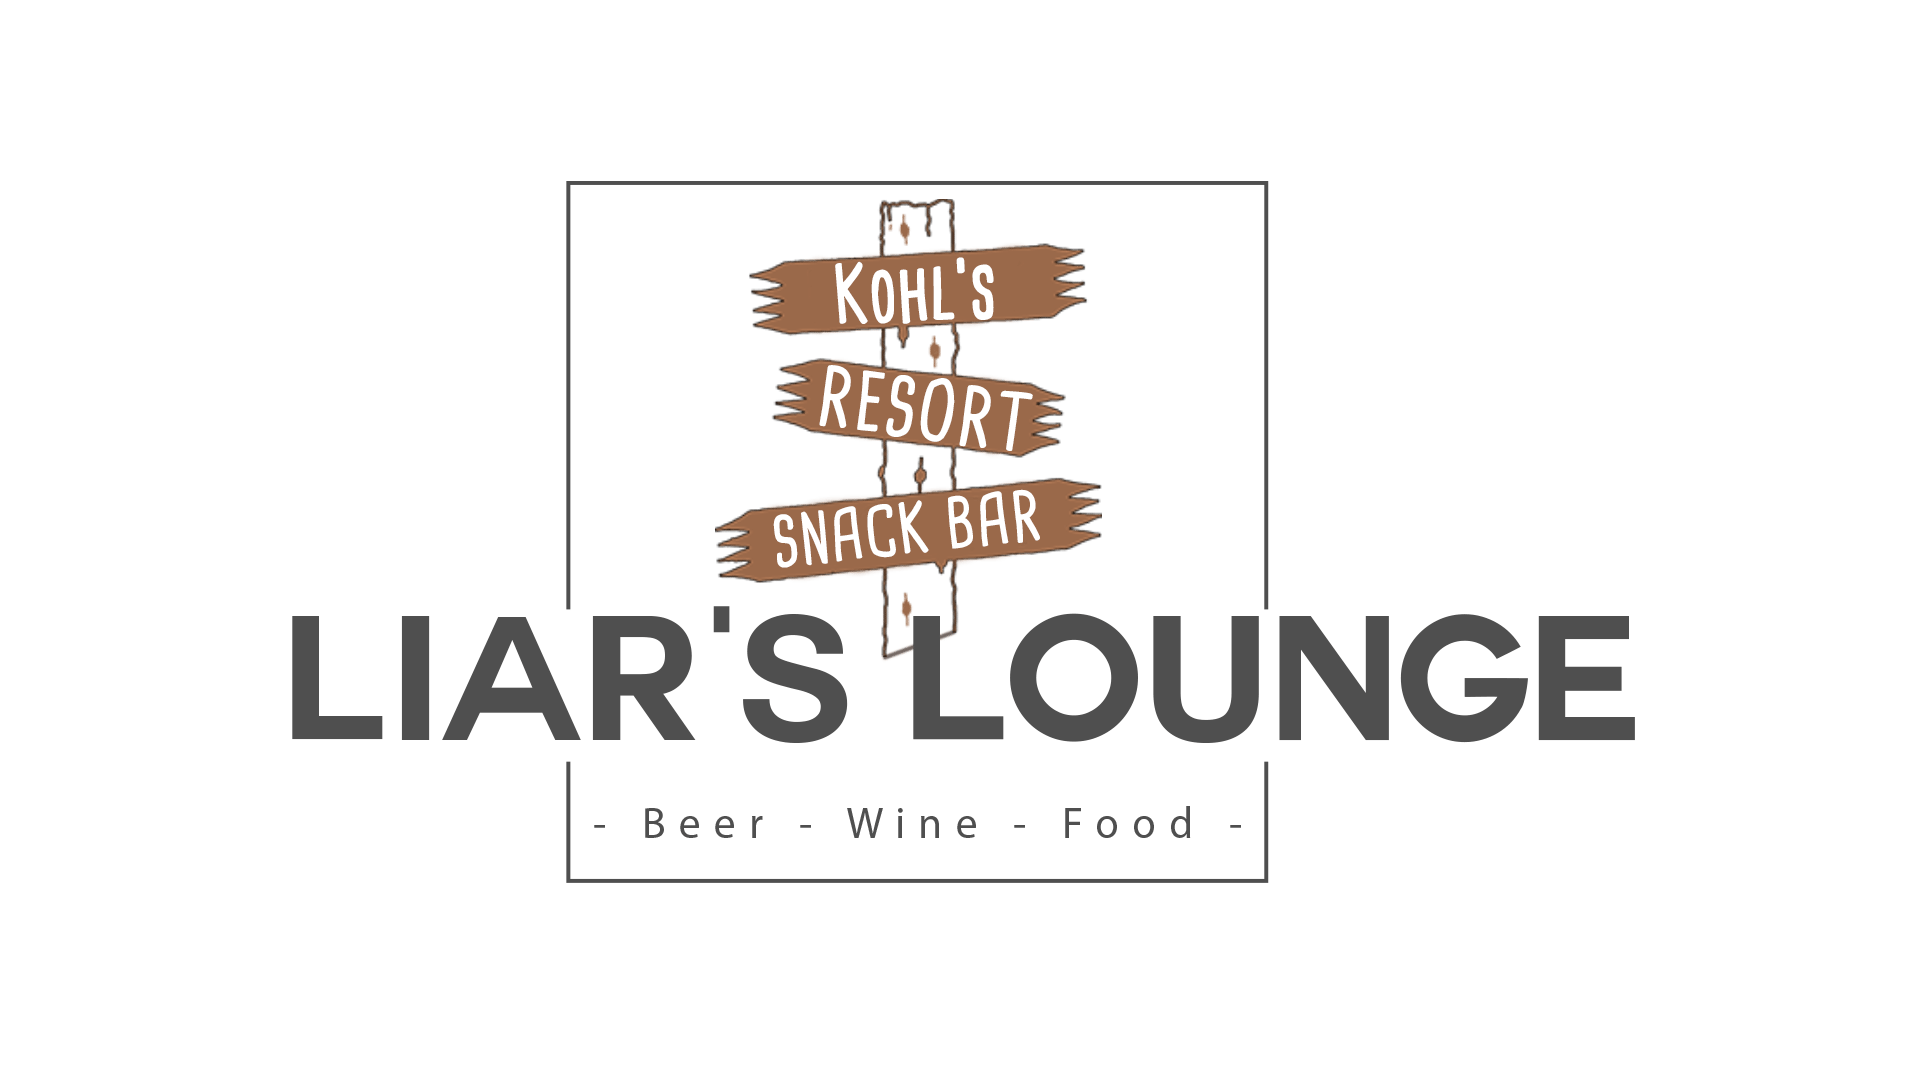 Liar's Lounge, Kohl's Resort